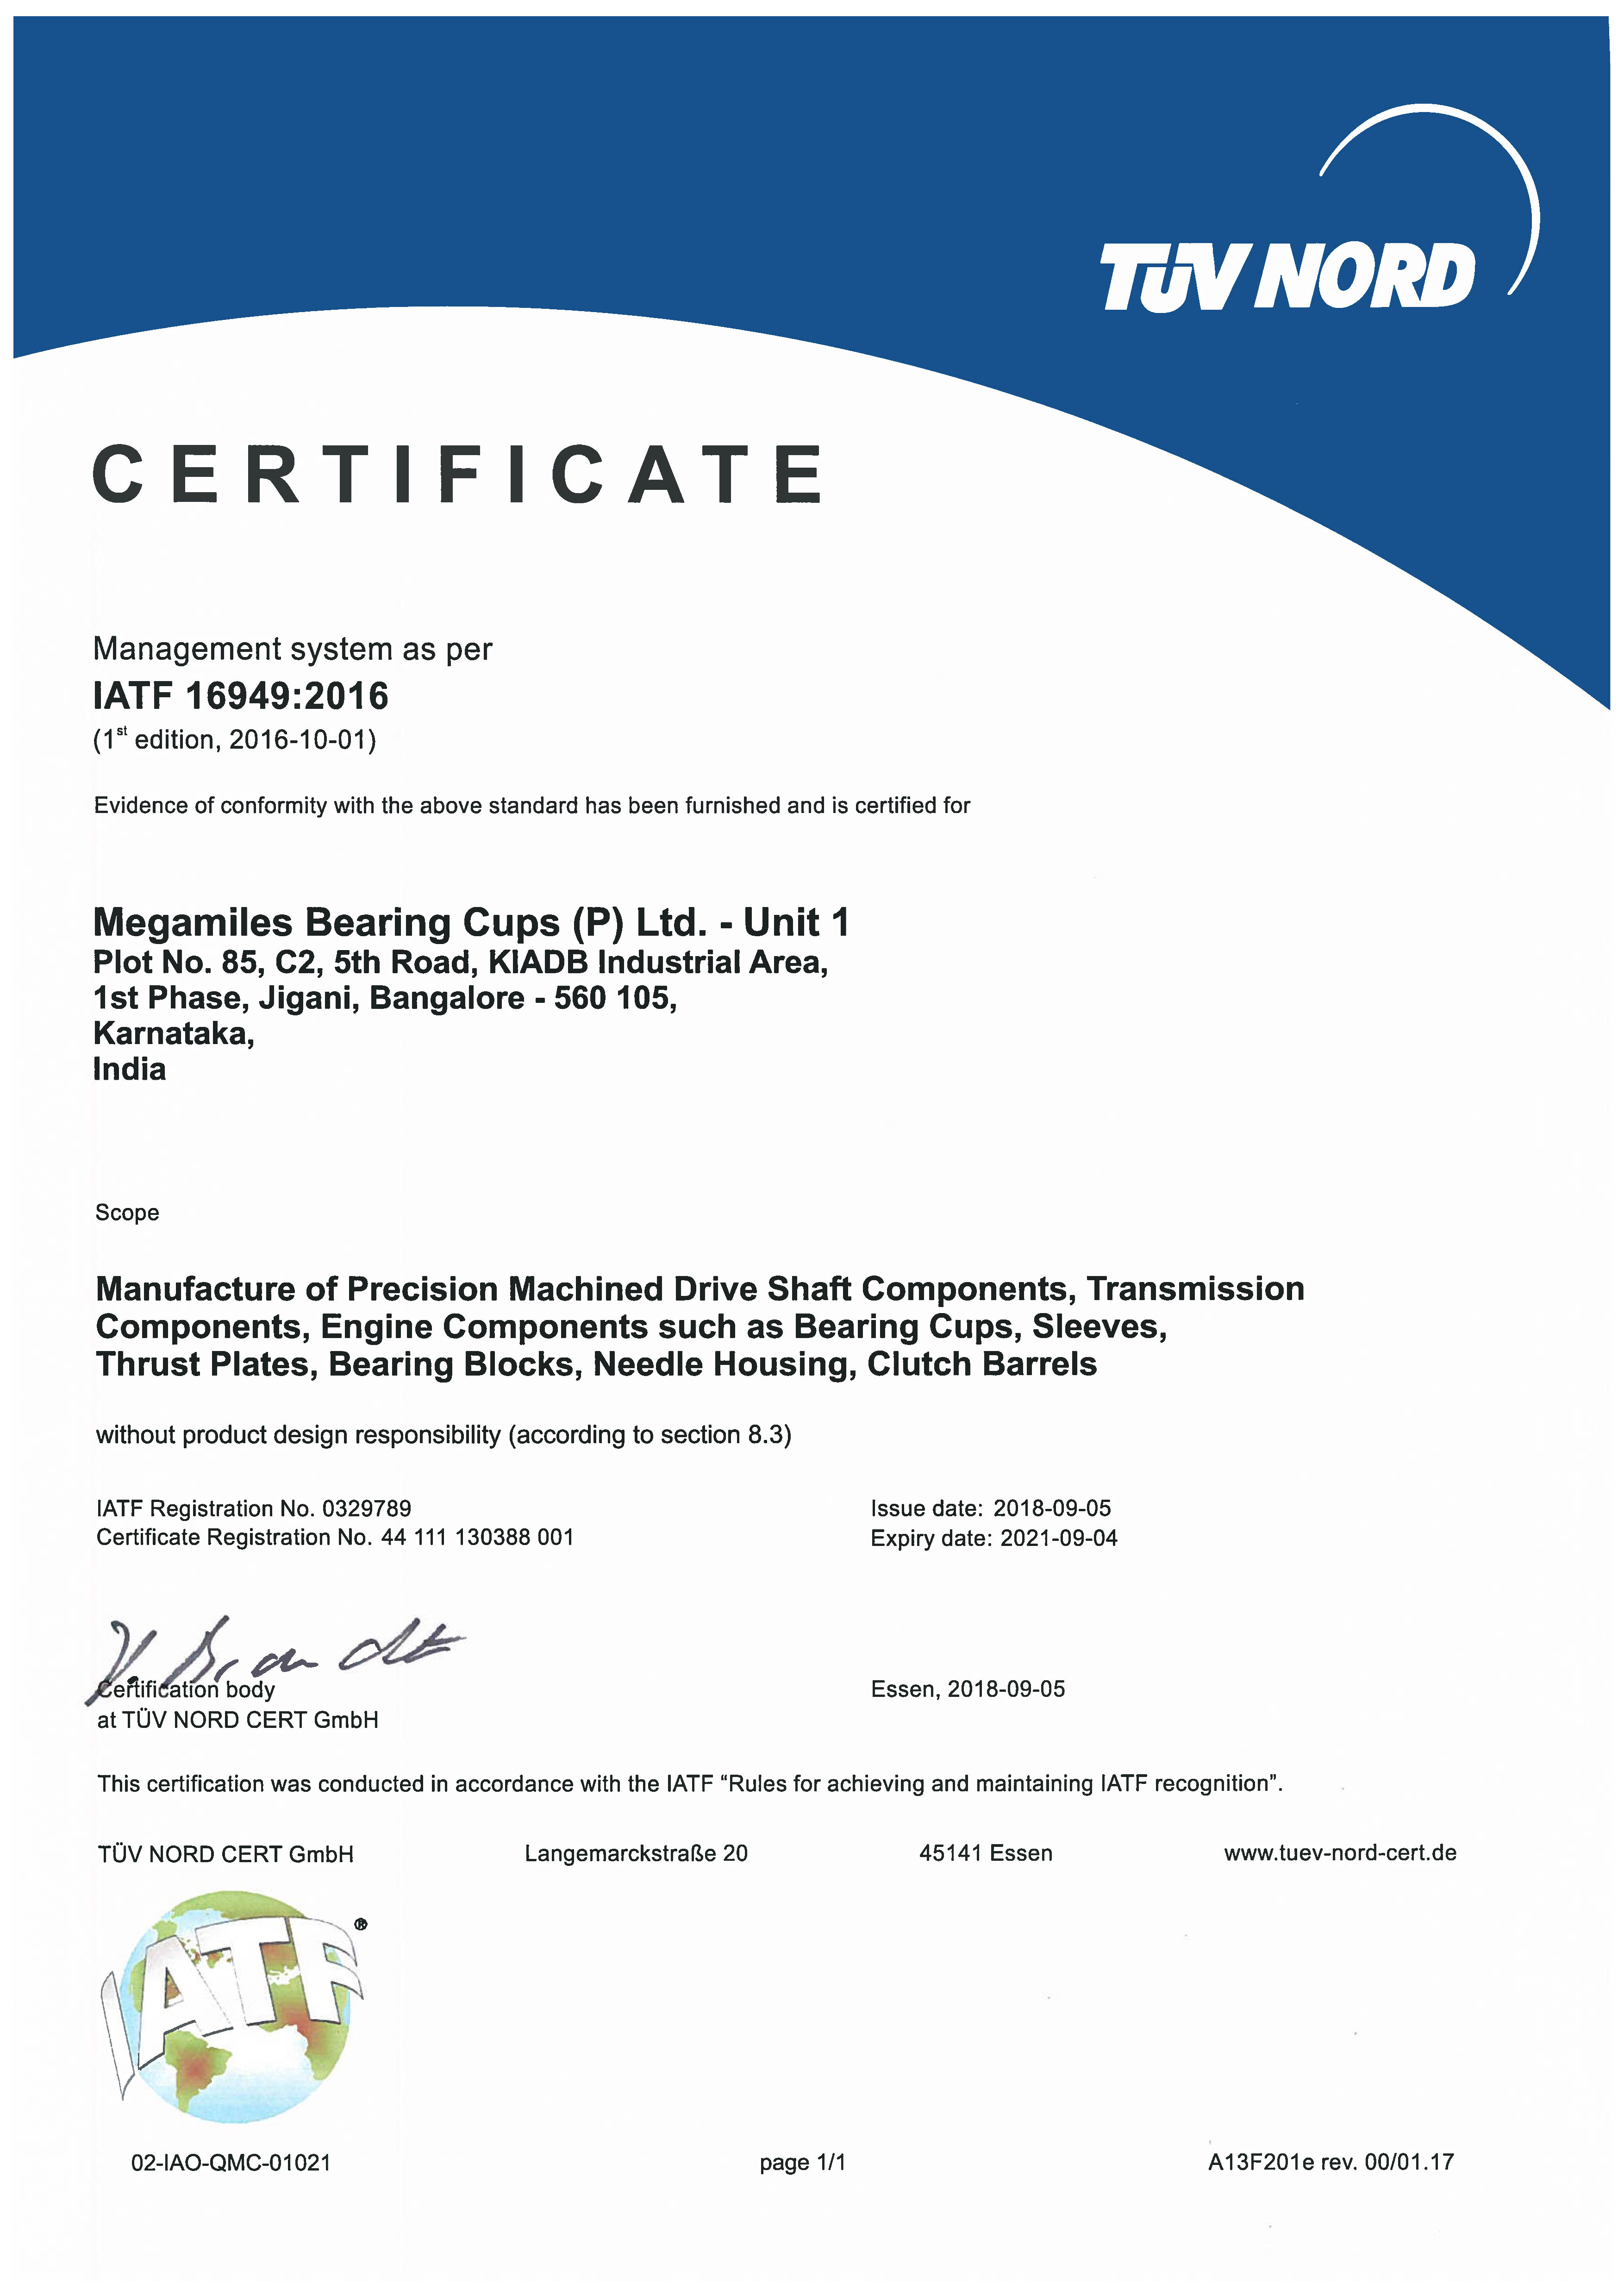 Megamiles IATF 16949 Certificate